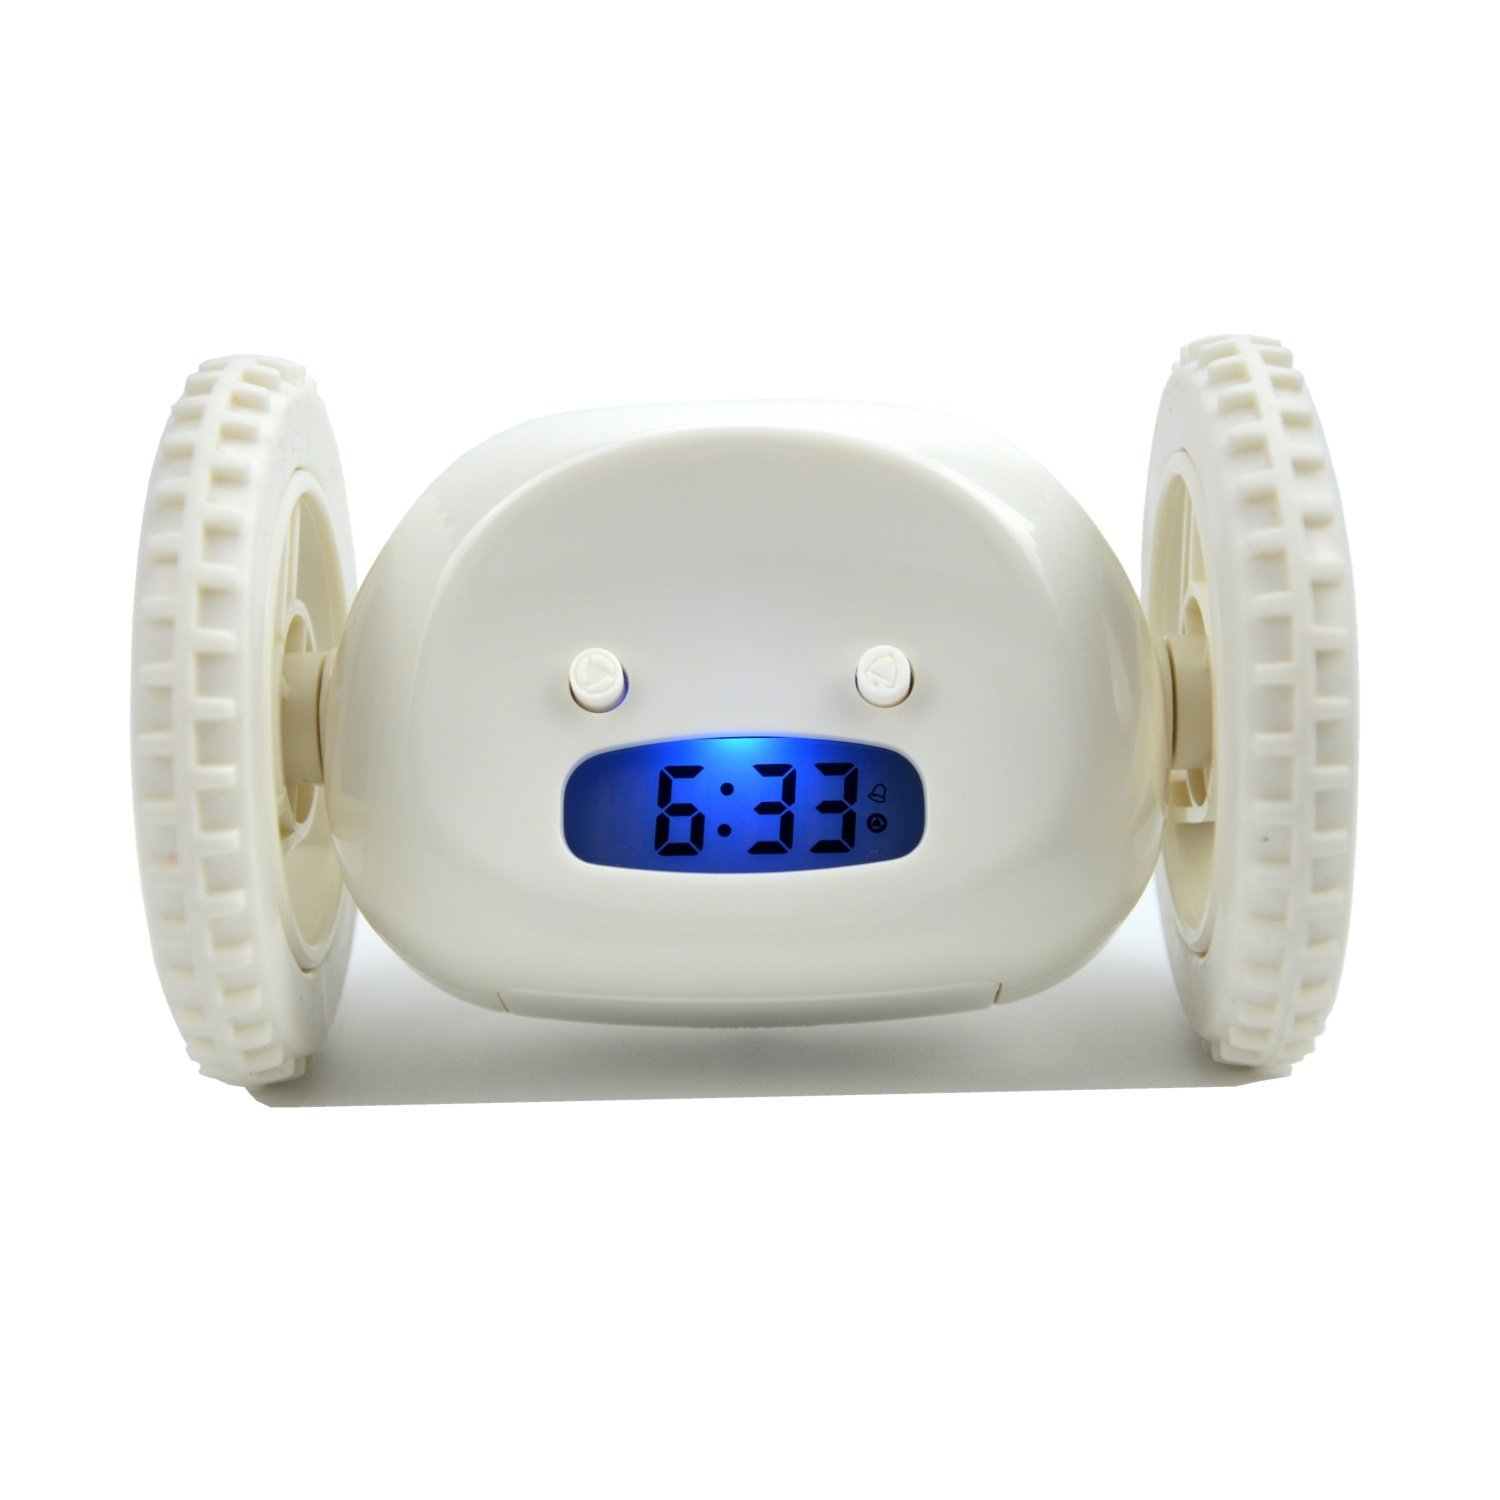 Ning store Alarm Clock on Wheels Runaway Alarm Clock Heavy Sleepers Alarm Clock Snooze Alarm Clock